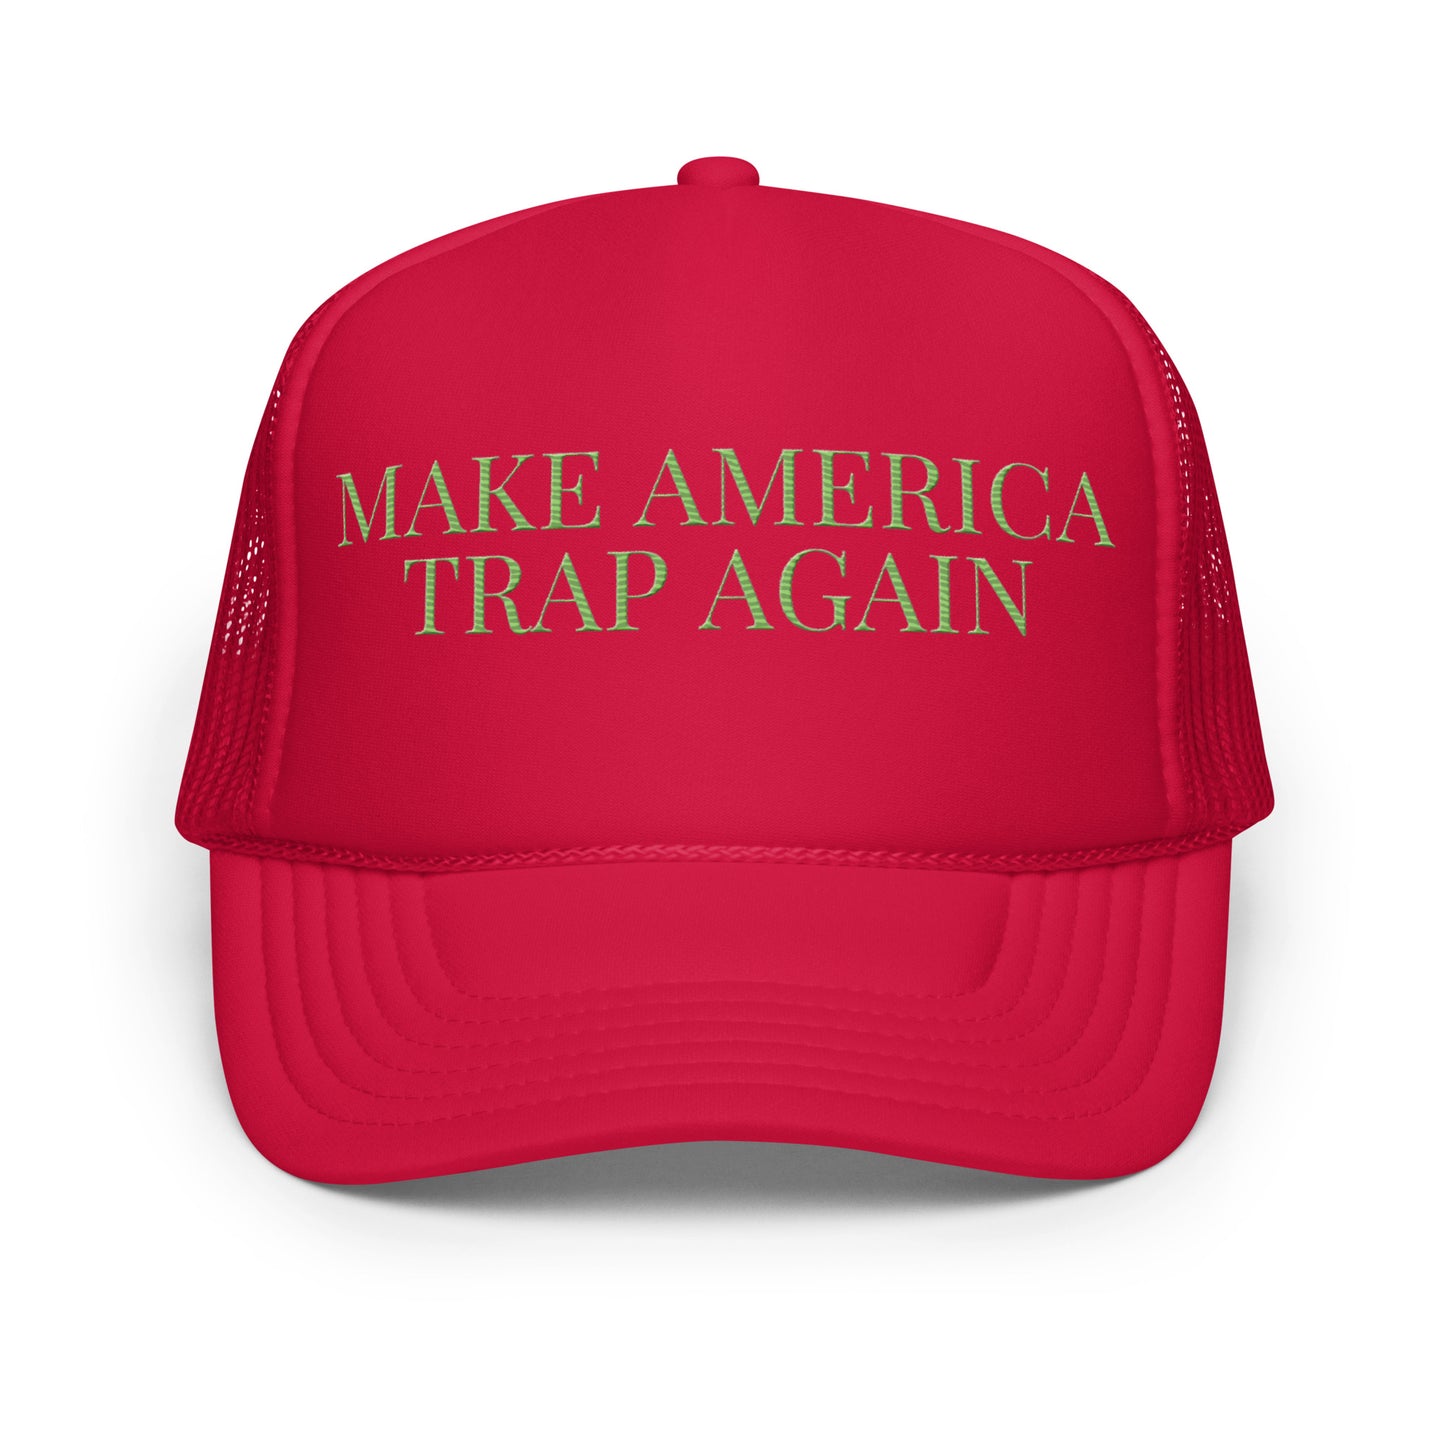 MAKE AMERICA TRAP AGAIN TRUCKER HAT